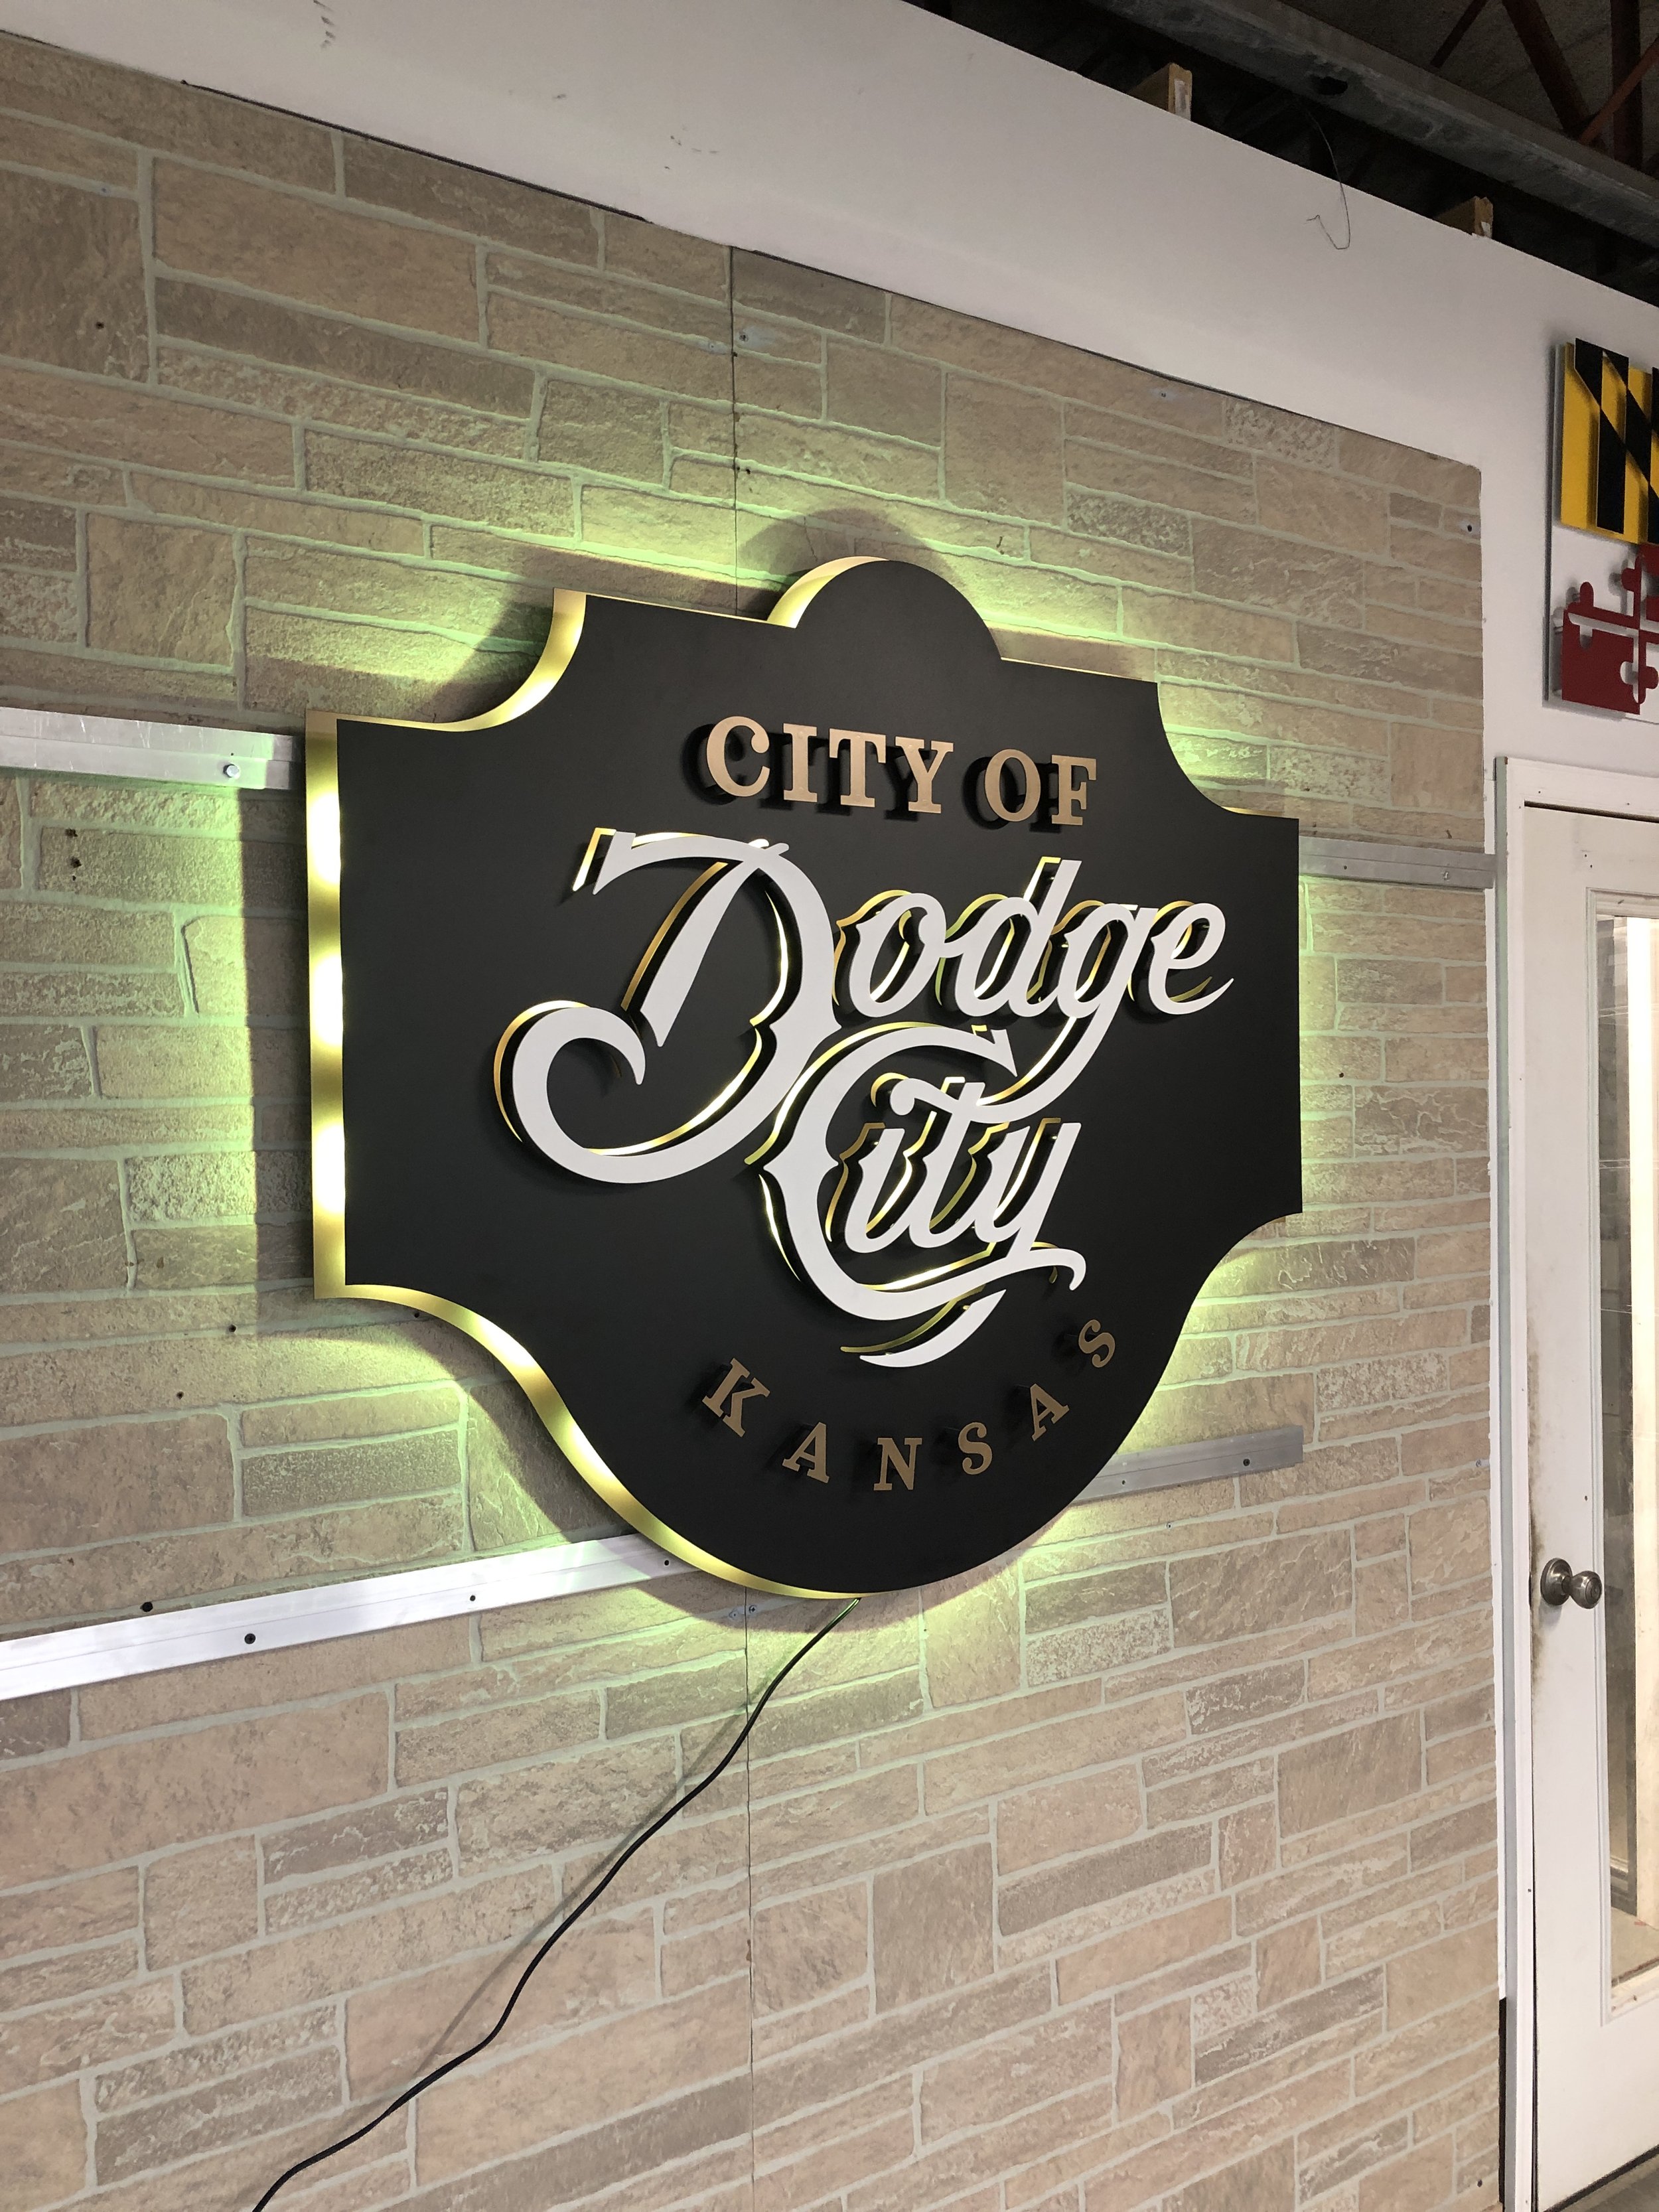 City of Dodge multi layer lit (1).JPG